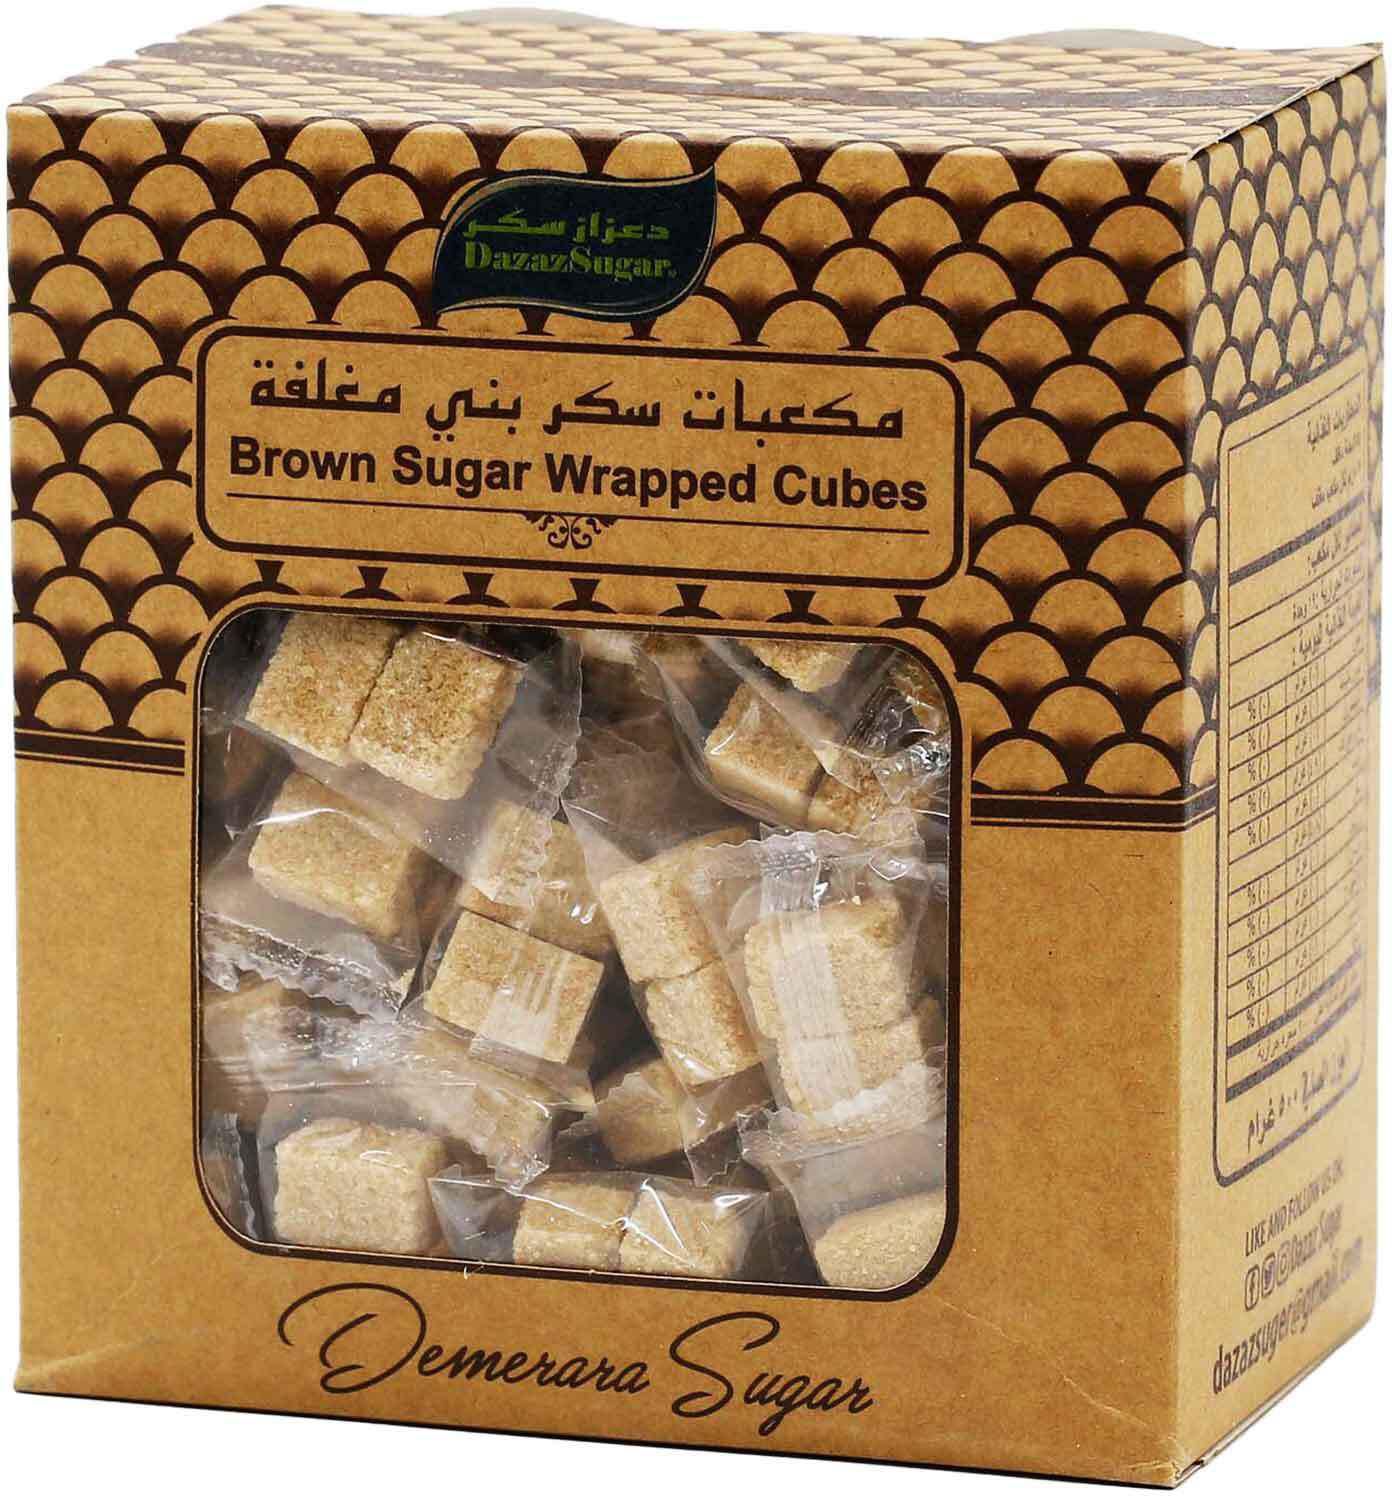 Dazaz brown sugar wrapped cubes 500 g